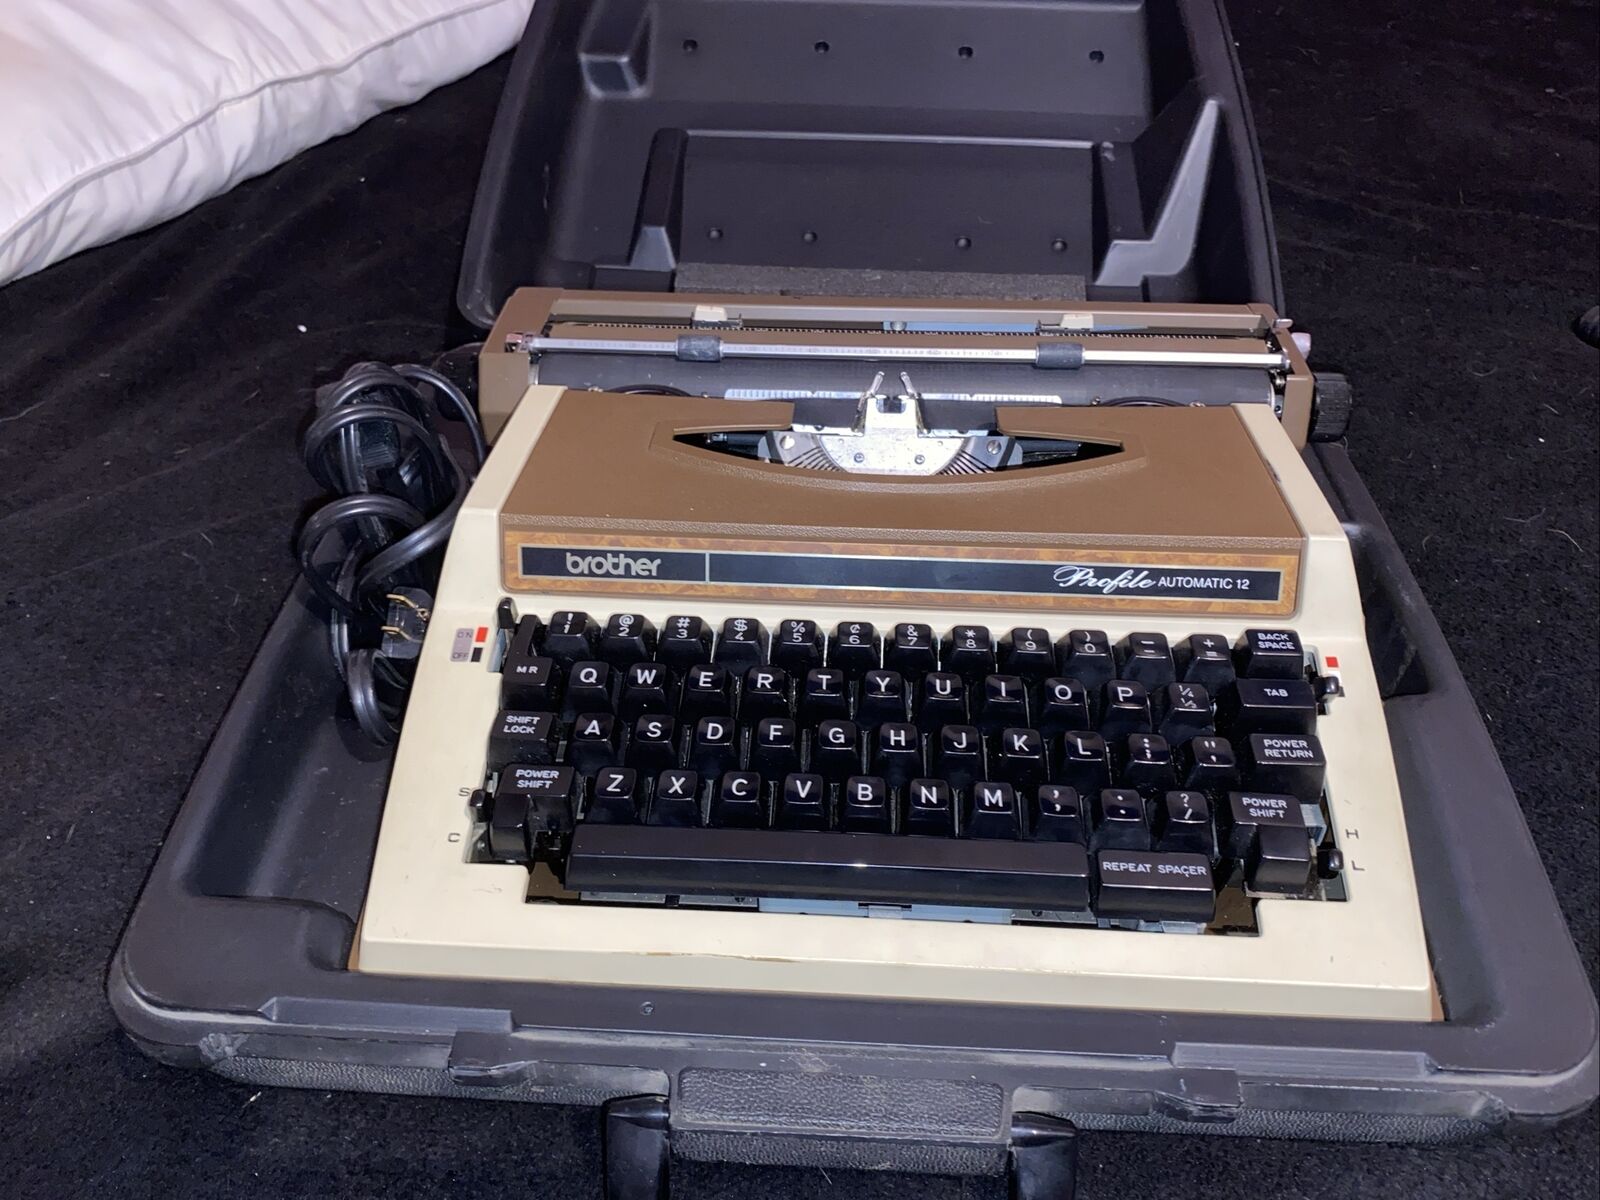 People Automatic 12 typewriter